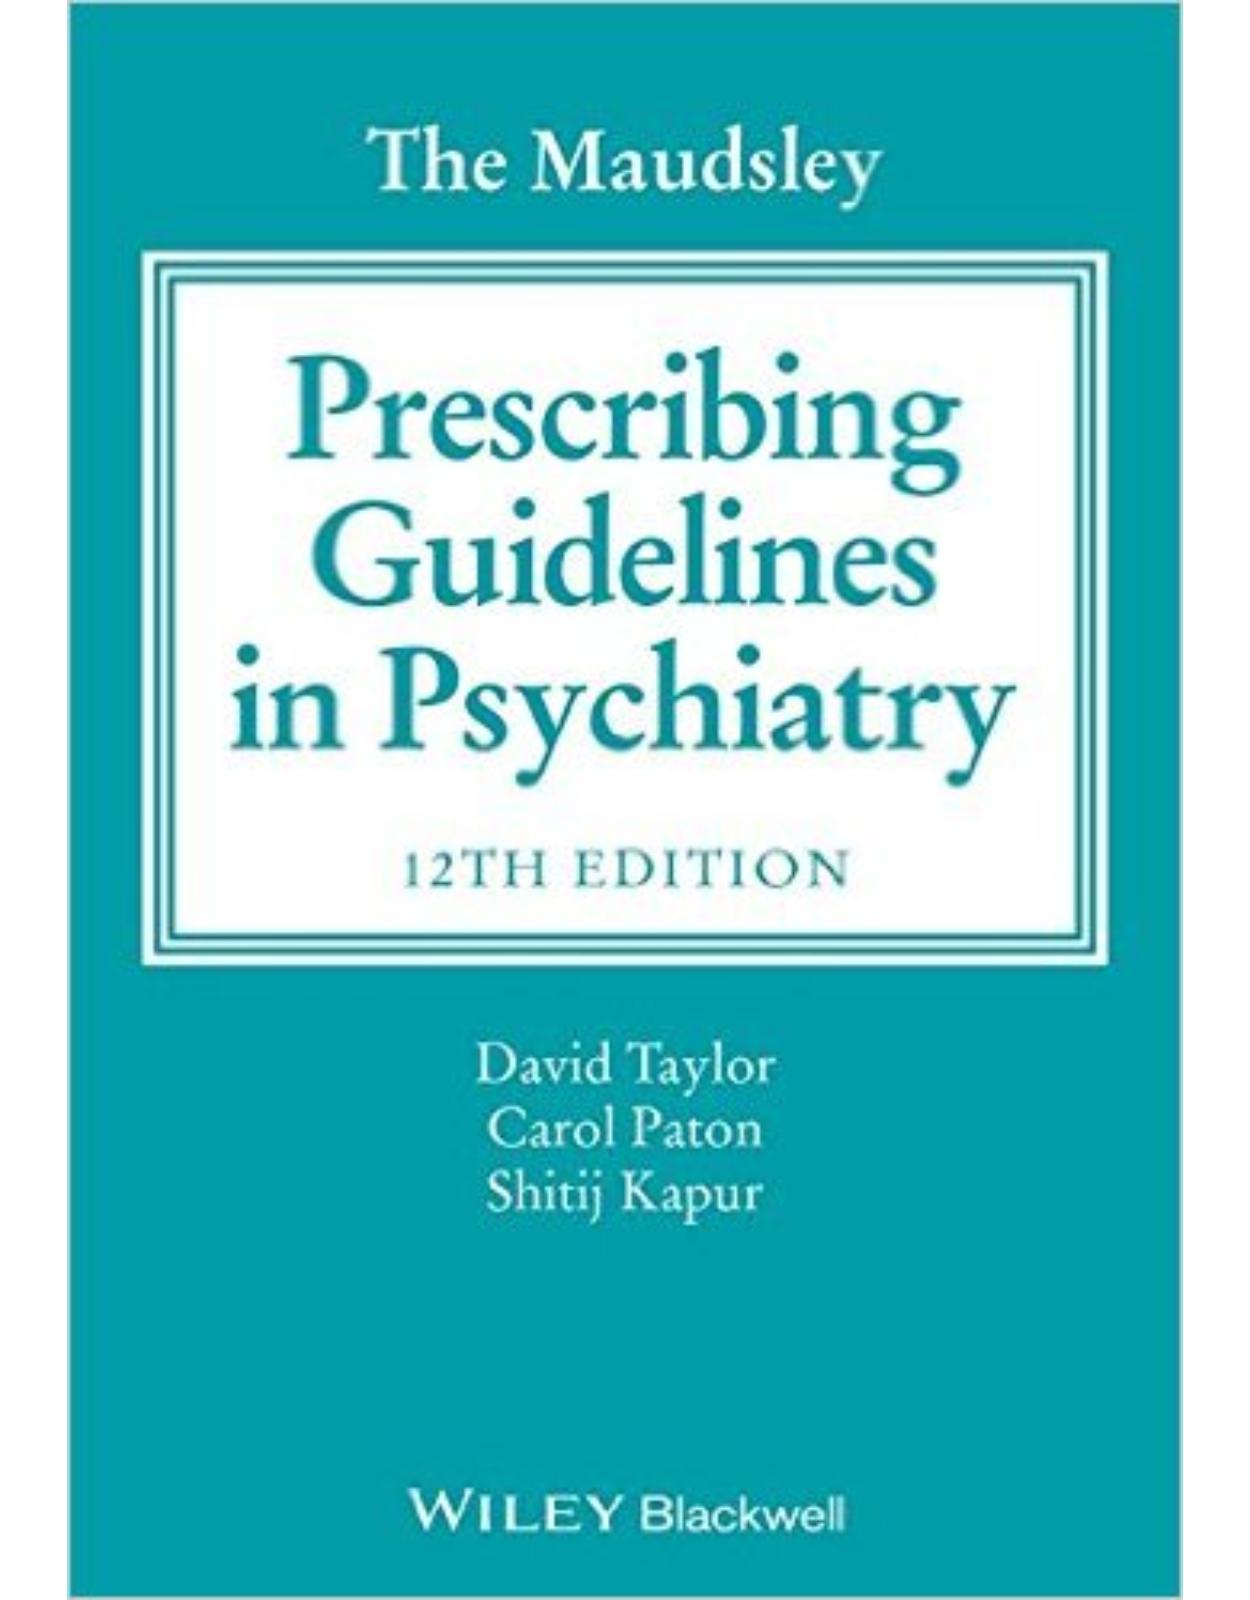 The Maudsley Prescribing Guidelines in Psychiatry 12th Edition